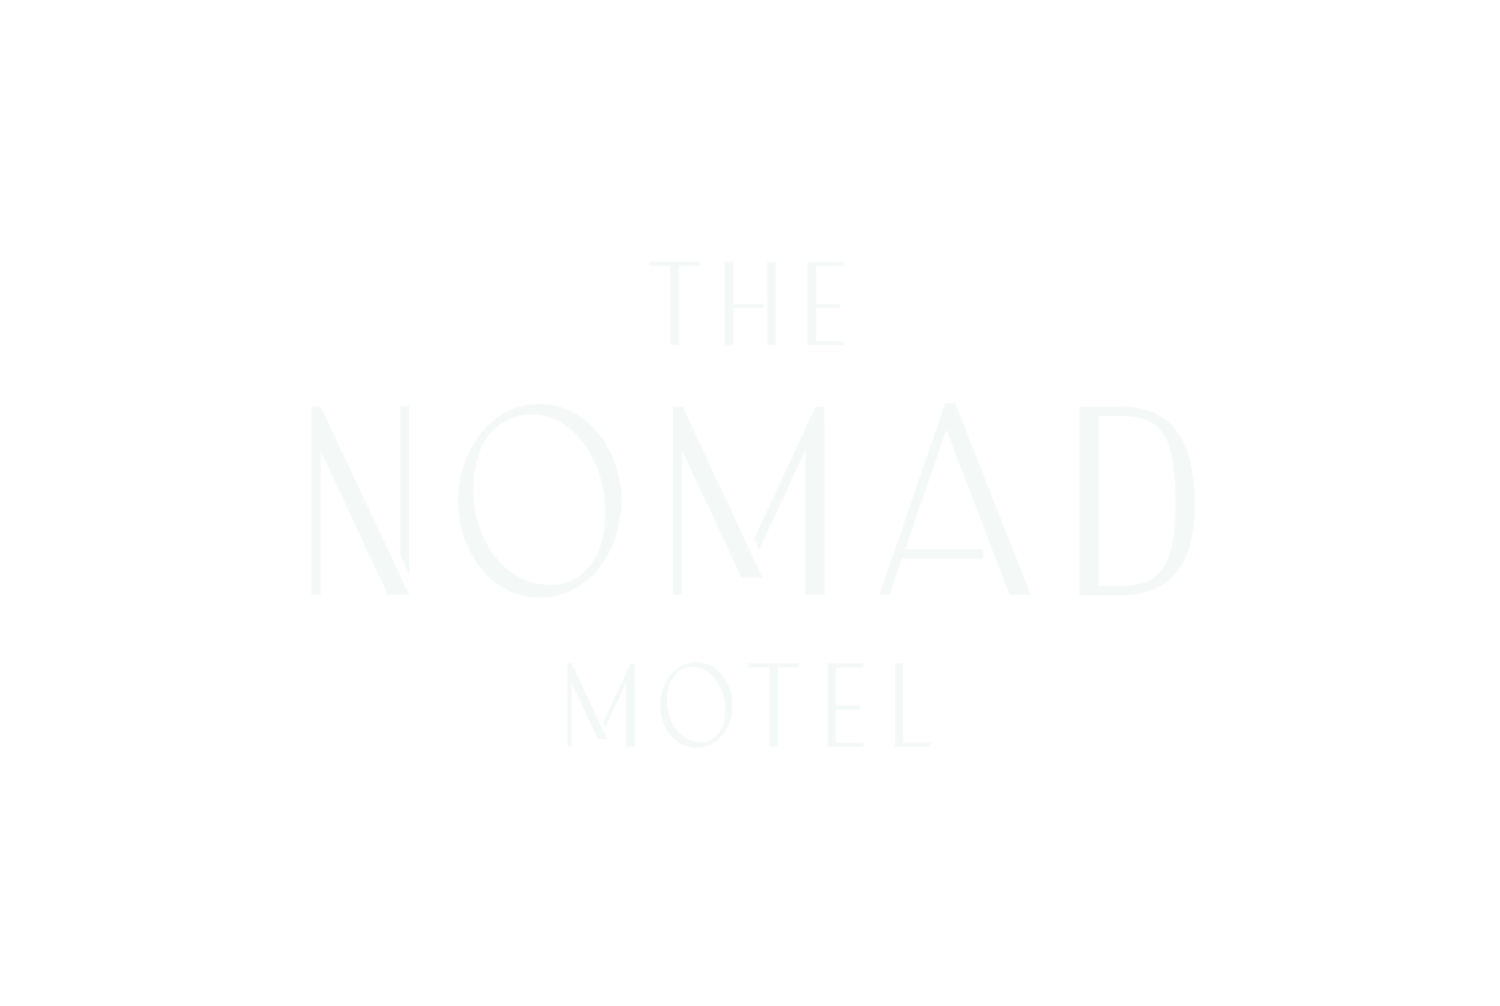 The Nomad Motel